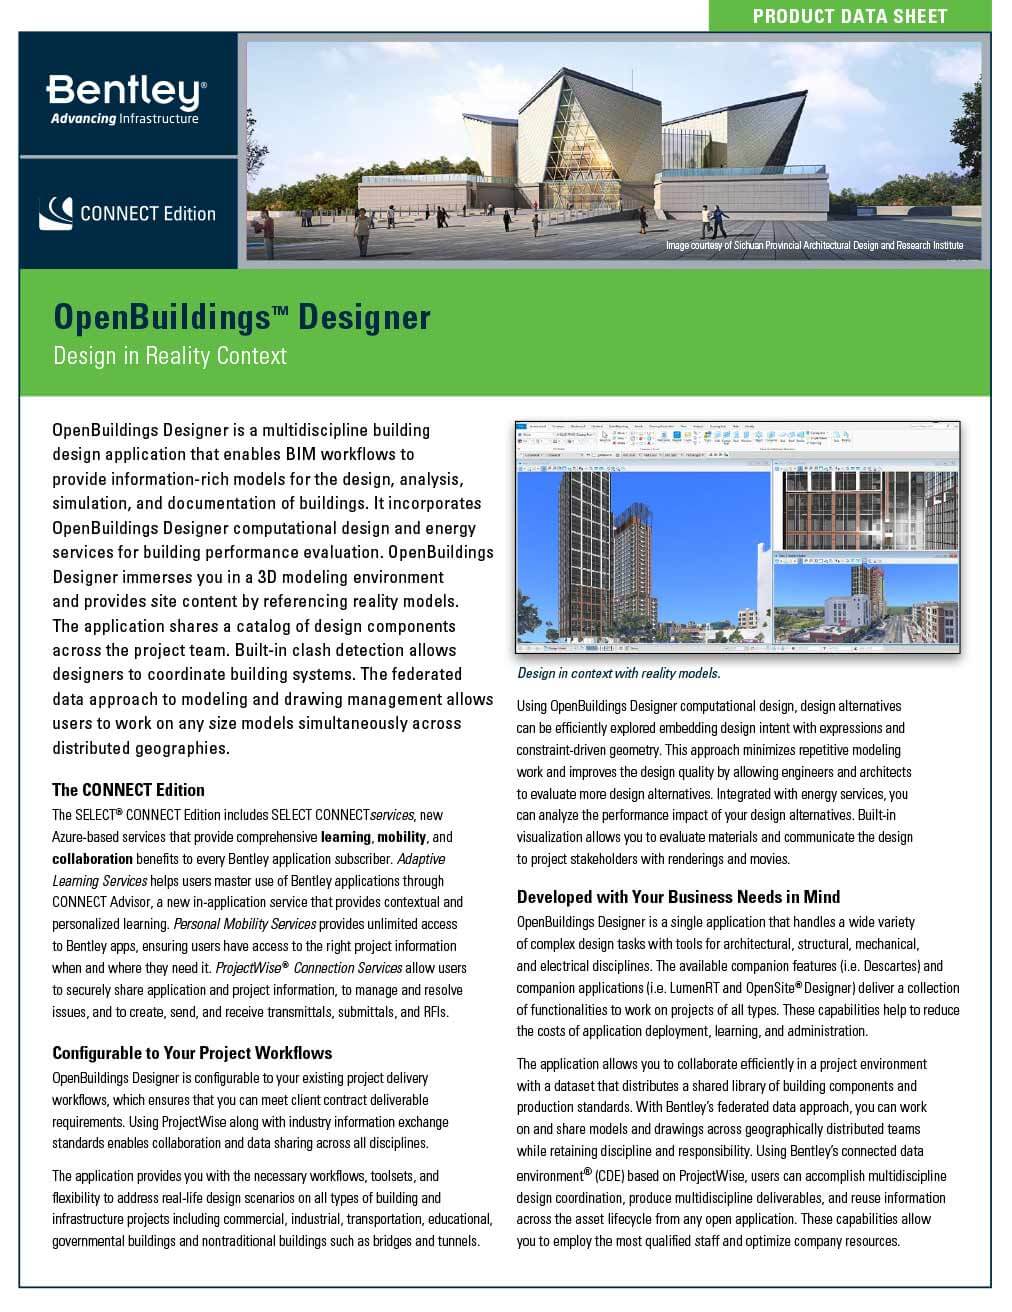 pds-open-buildings-designer-lrt-en